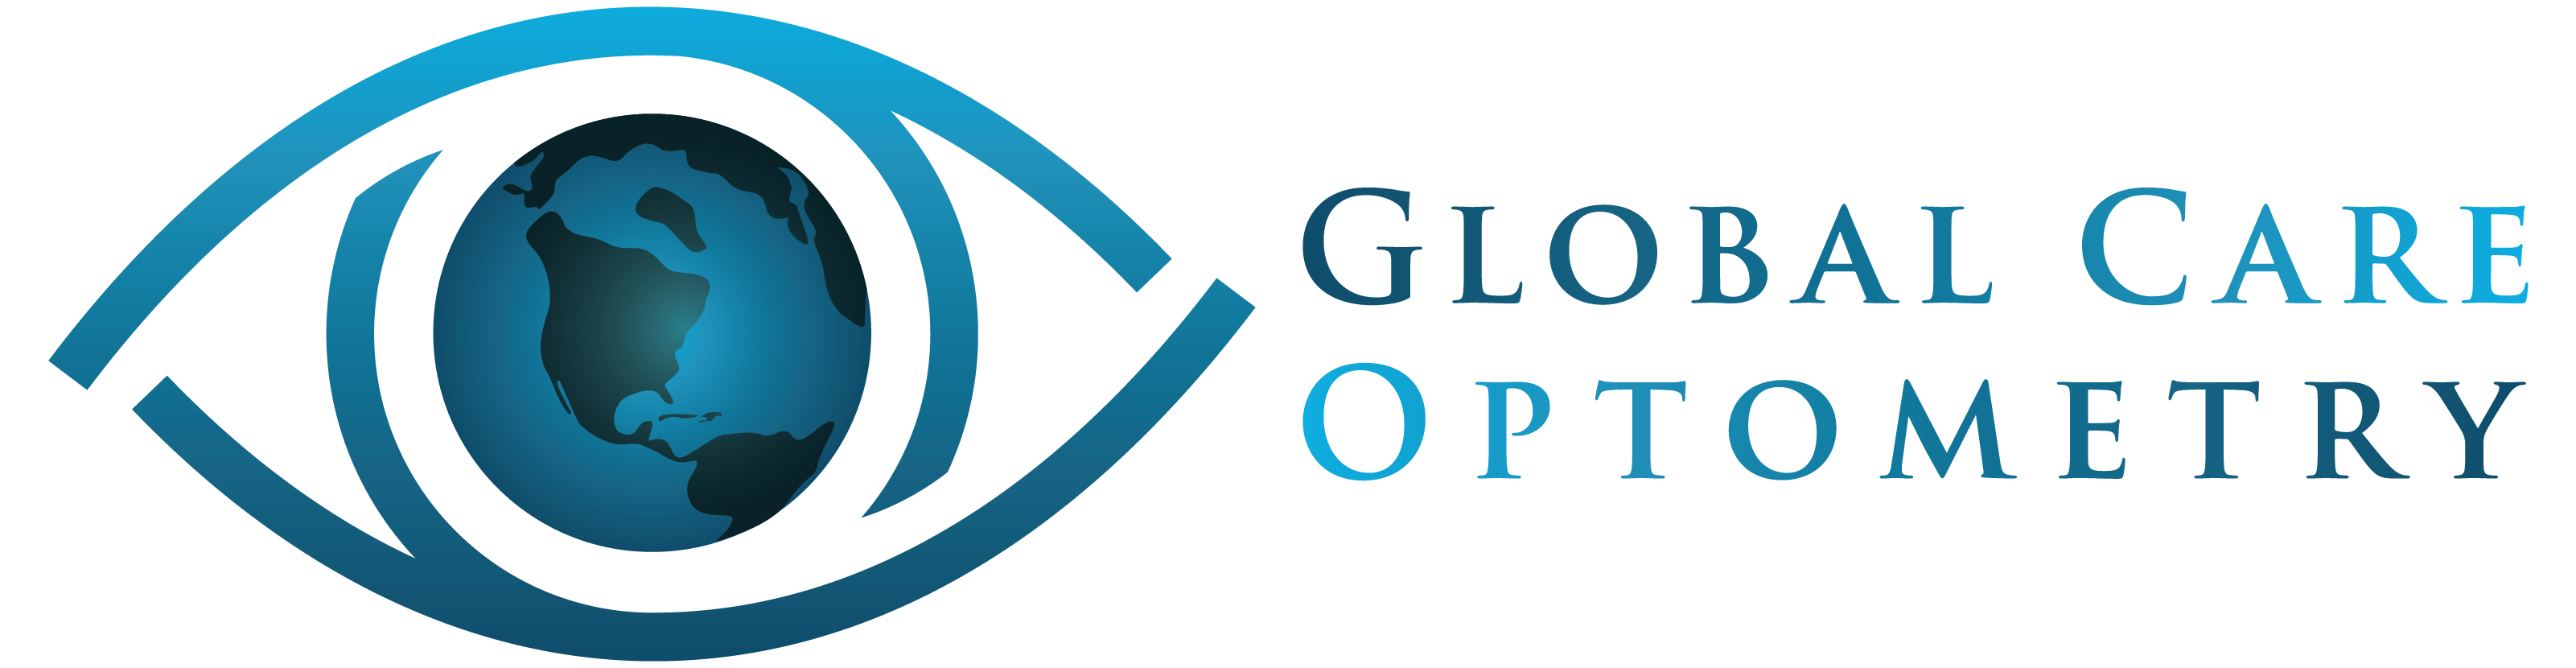 Global Care Optometry